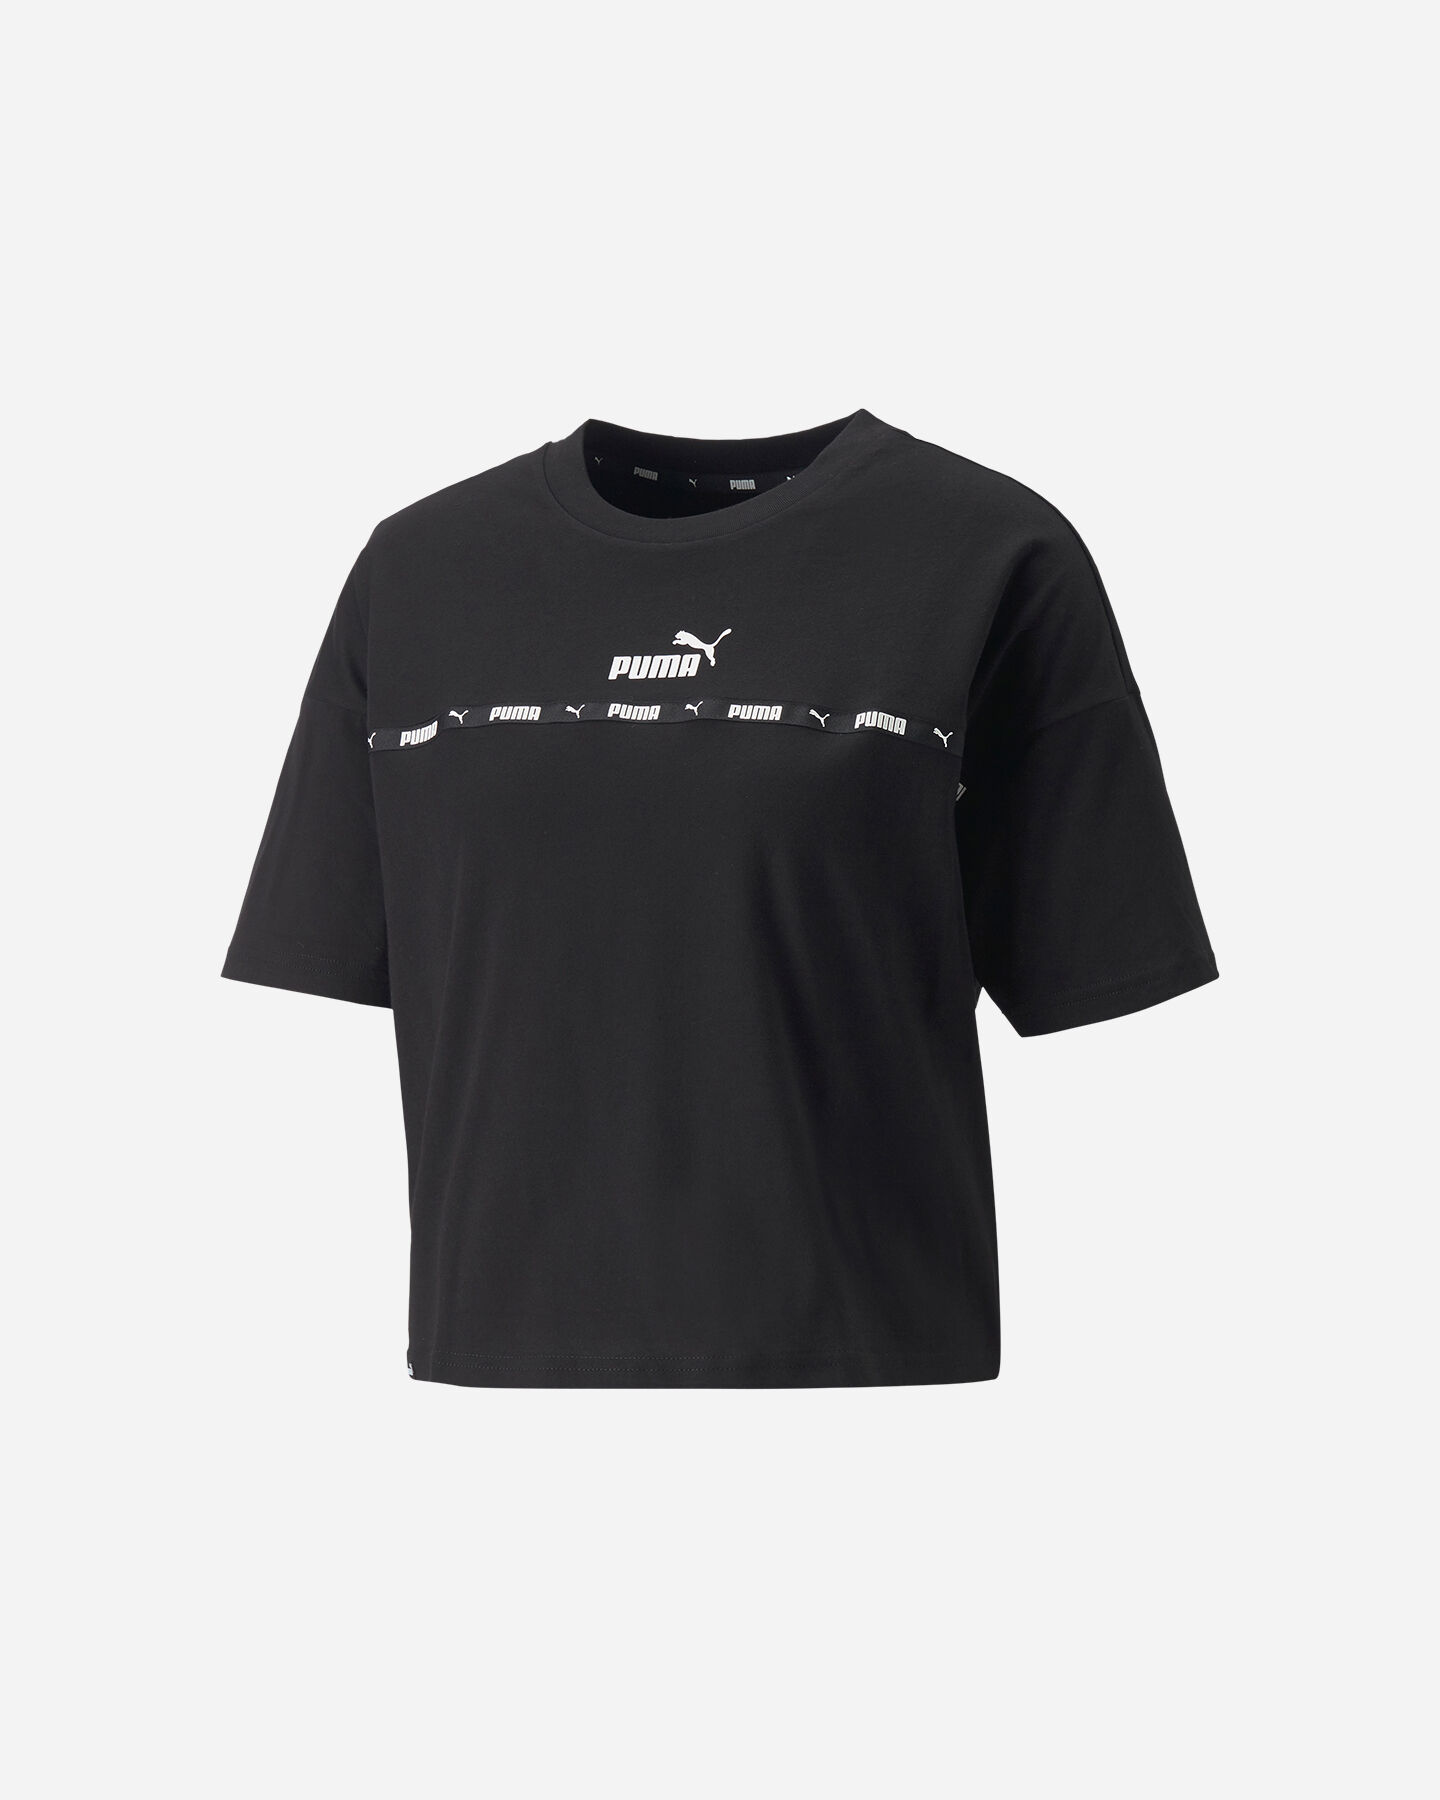  T-Shirt PUMA CROP TAPE LOGO W S5452279|01|XS scatto 0